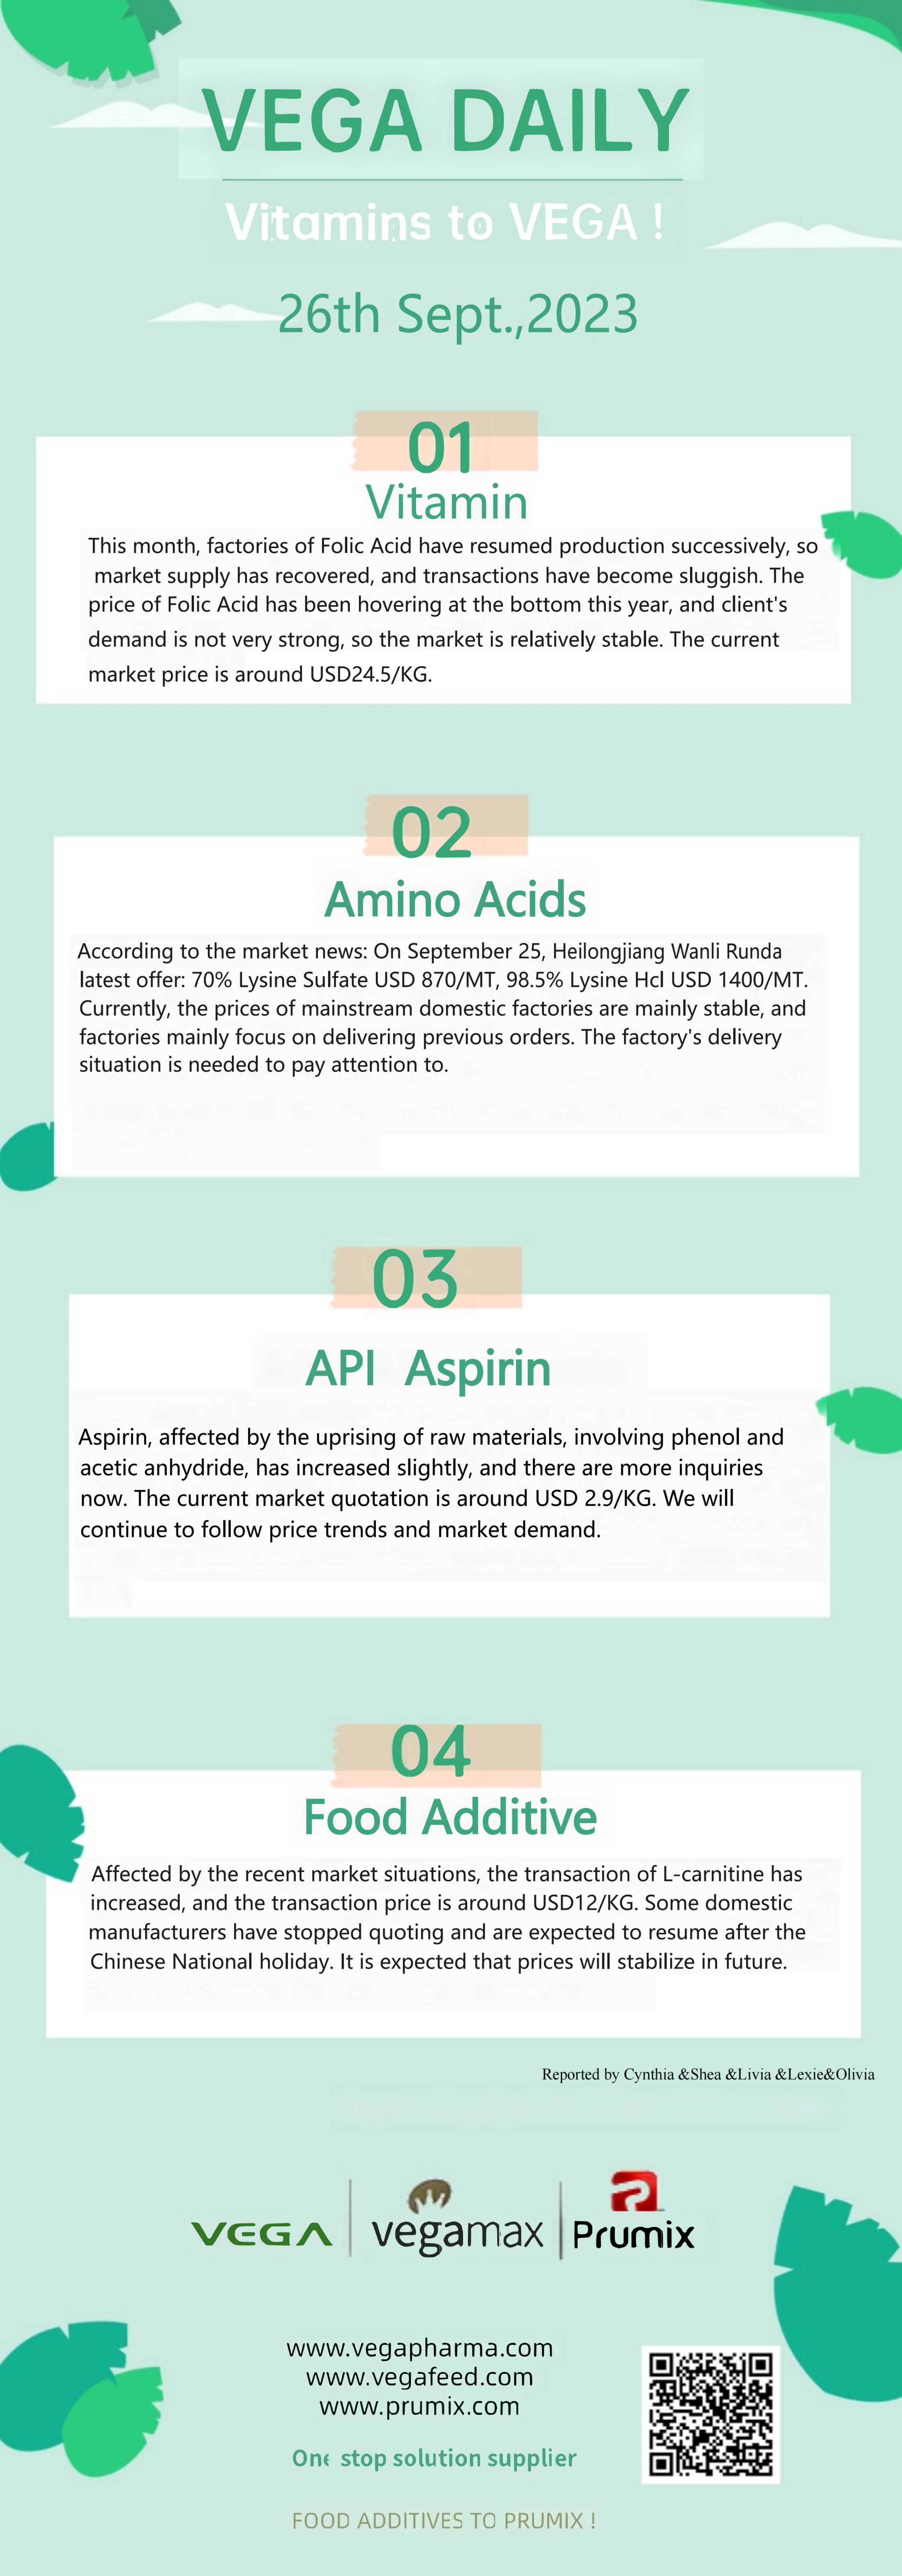 Vega Daily Dated on Sept 26th 2023 Vitamin Amino Acid API Food Additives.jpg